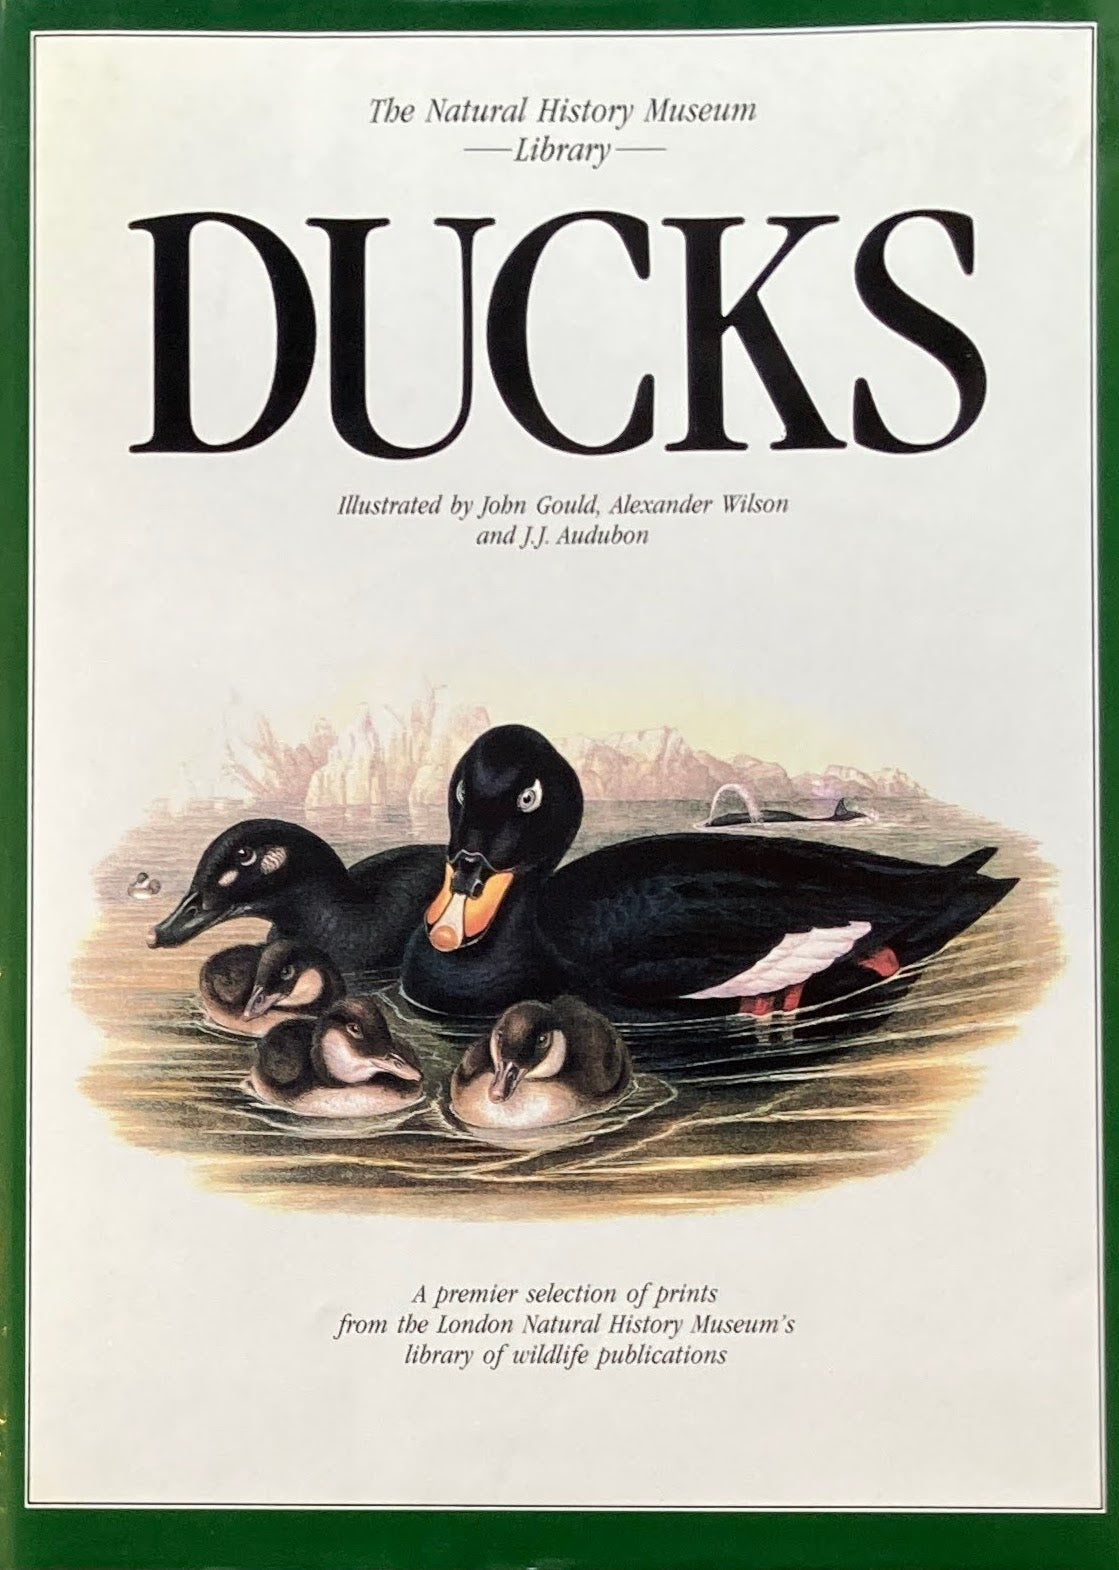 Ducks　Natural History Museum Library　J.J. Audubon　 John Gould　Alexander Wilson